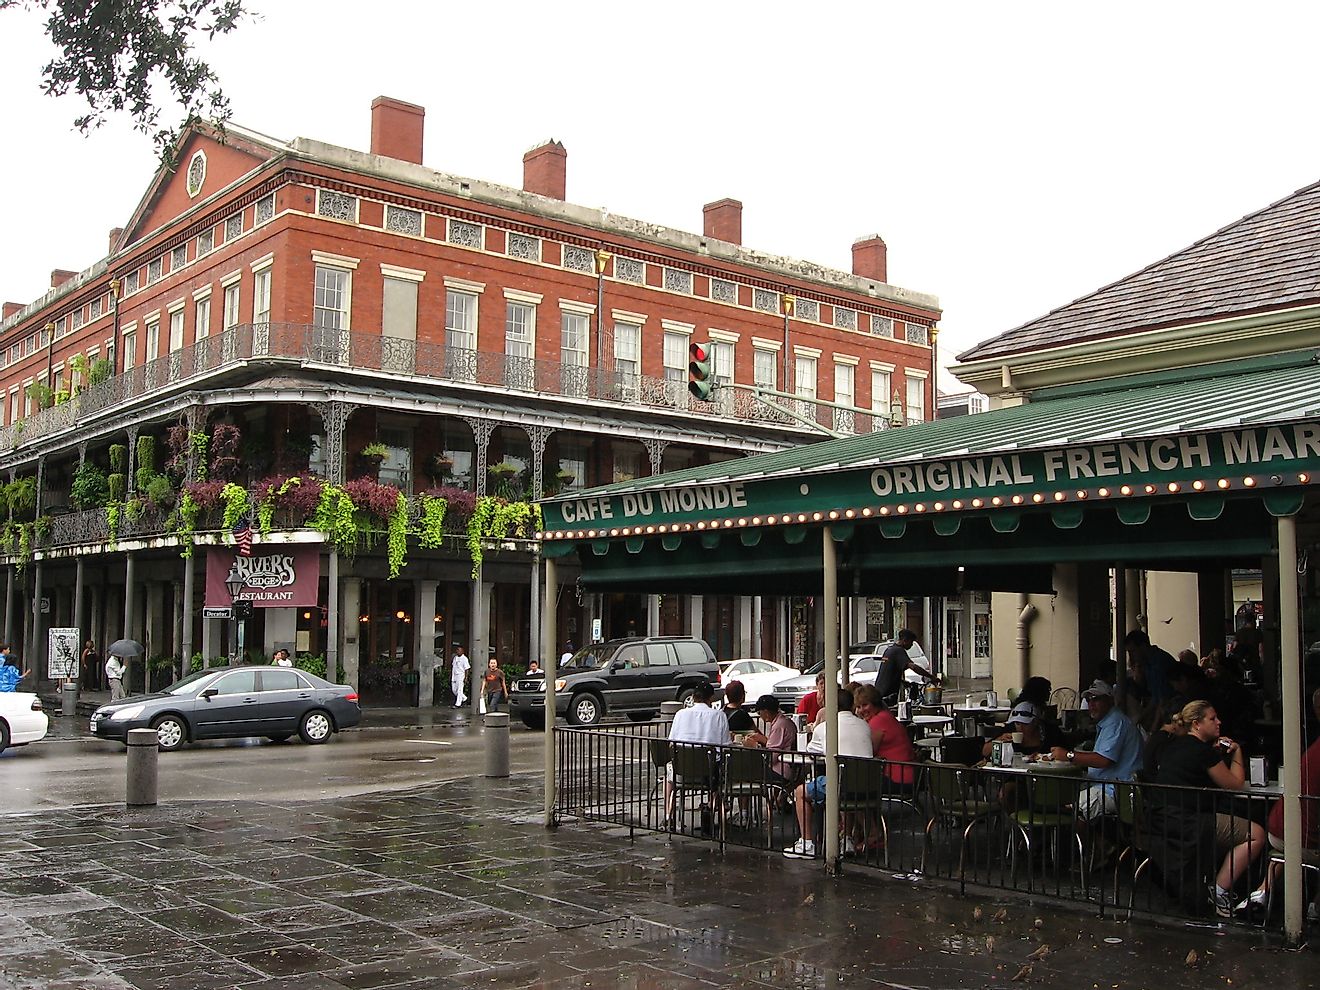 The French Quarter, New Orleans. Image credit: Ken Lund/Flickr.com